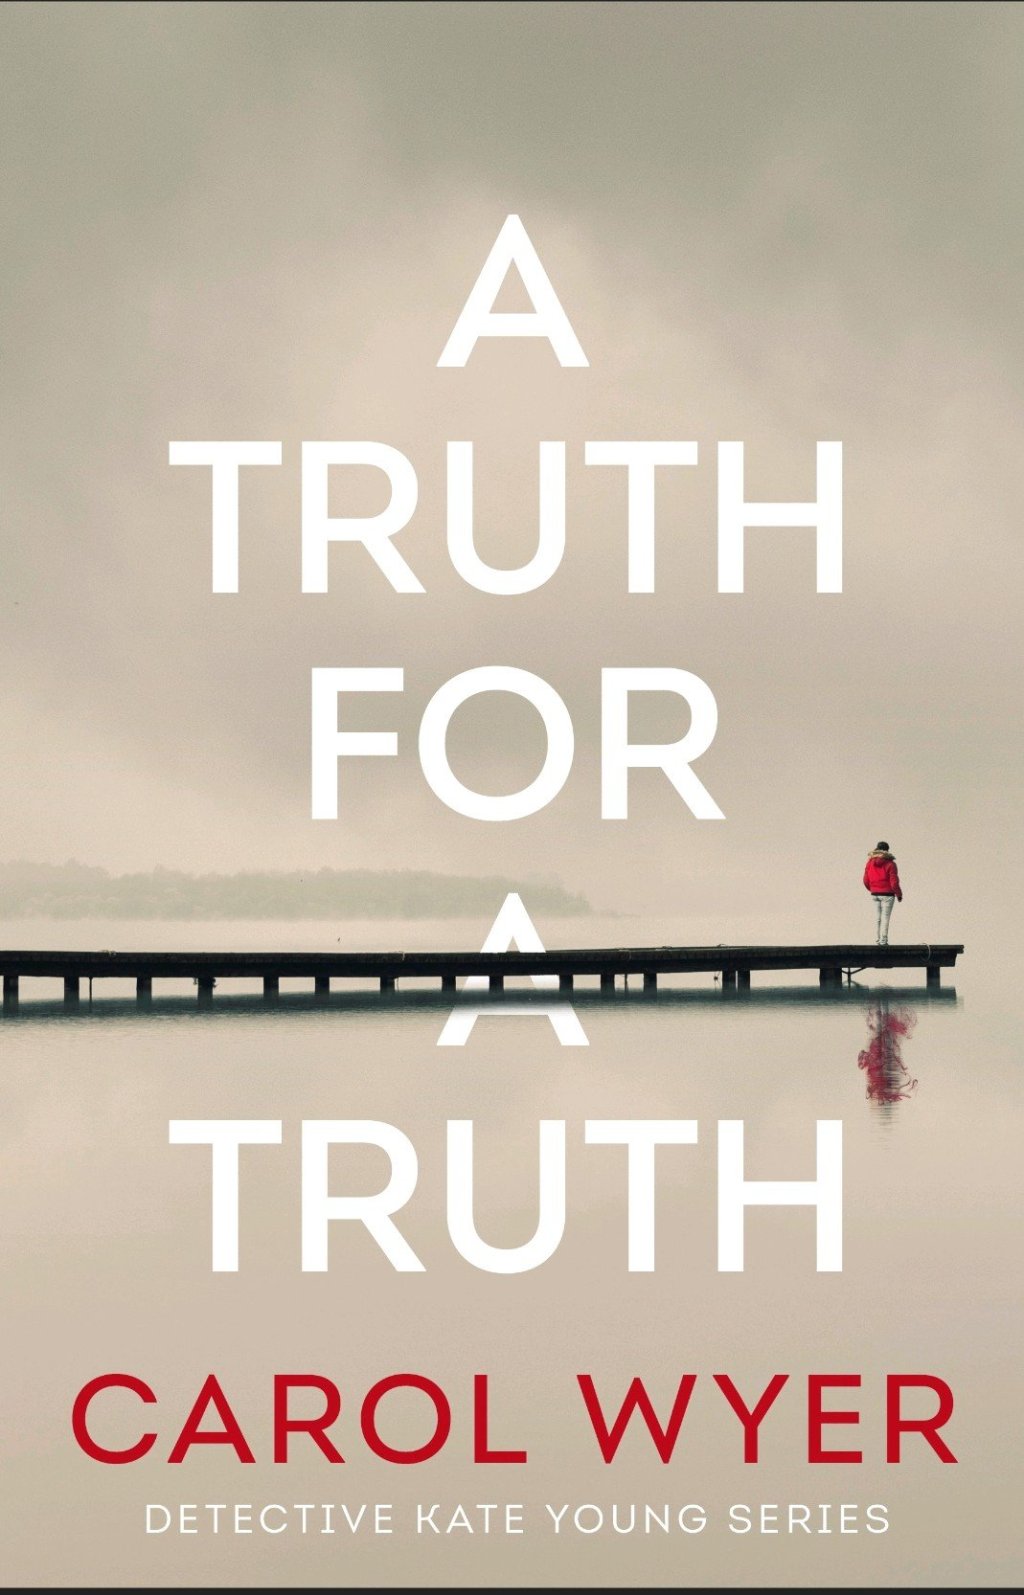 A Truth for a Truth by Carol Wyer